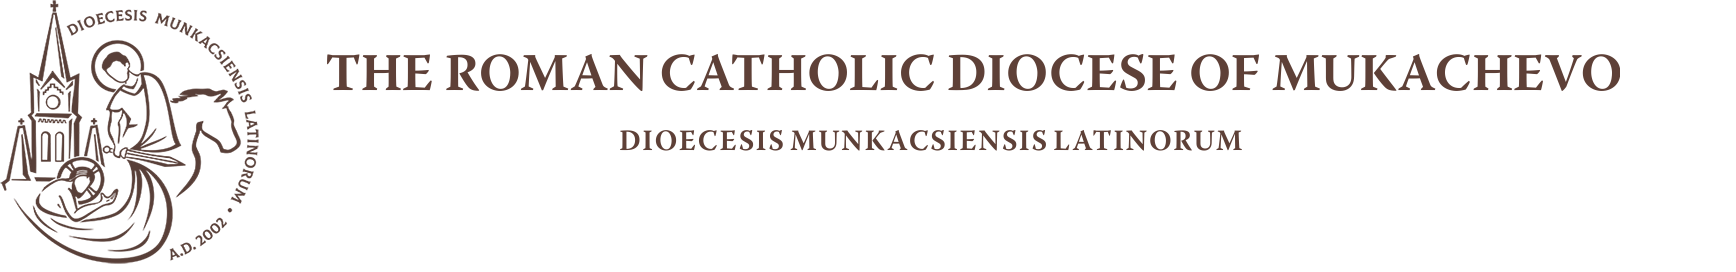 The Roman Catholic Diocese of Mukachevo